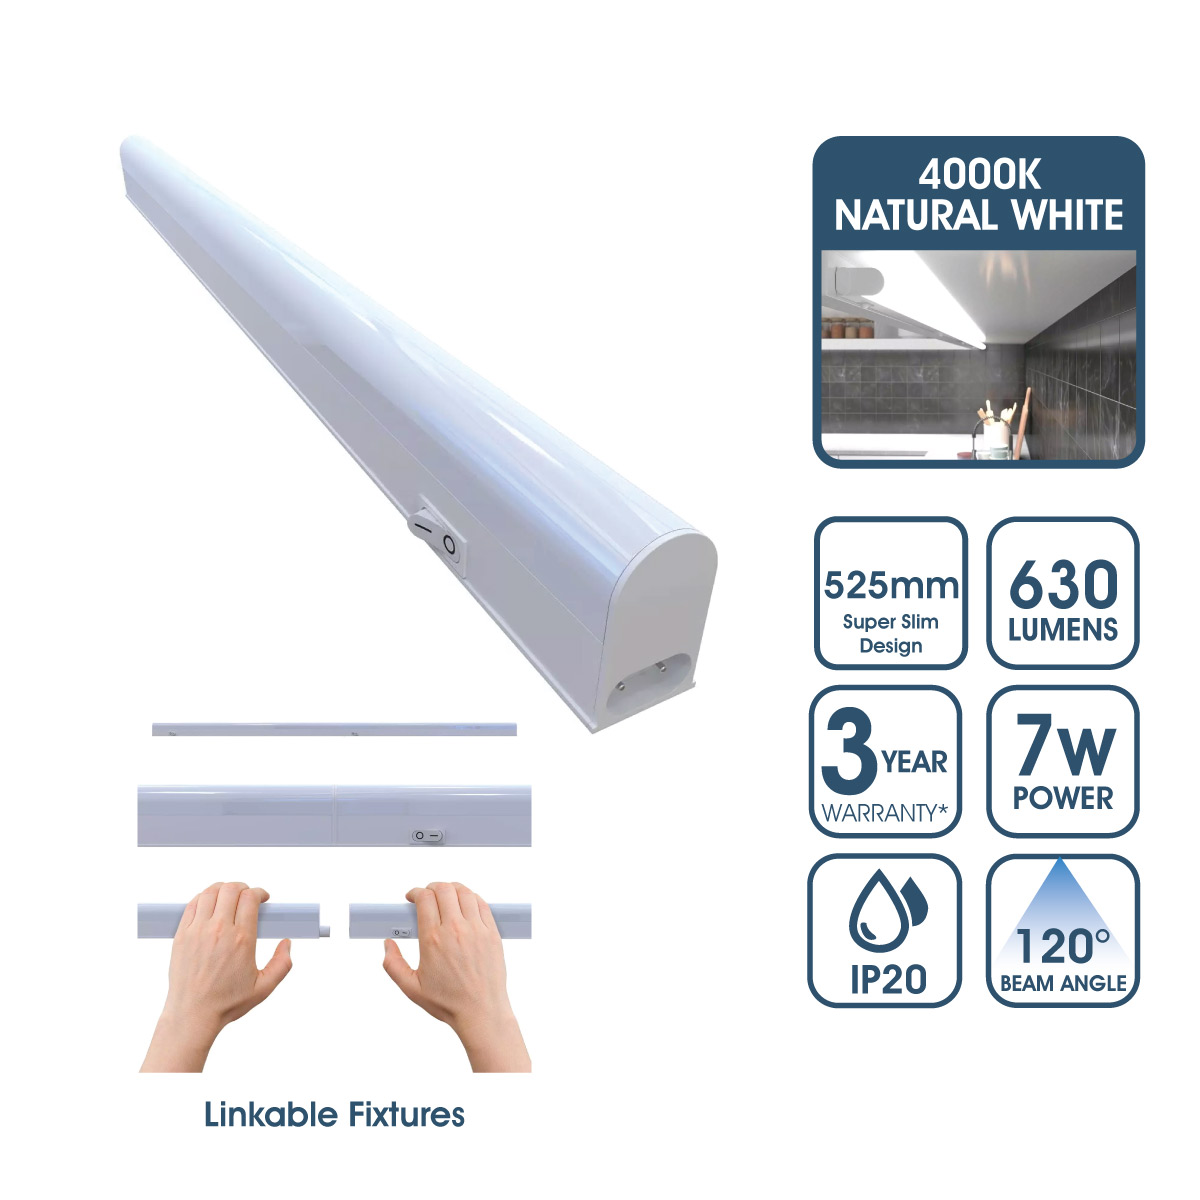 View 525mm Linkable LED Ultraslim Under Cabinet Light Fitting Natural White information